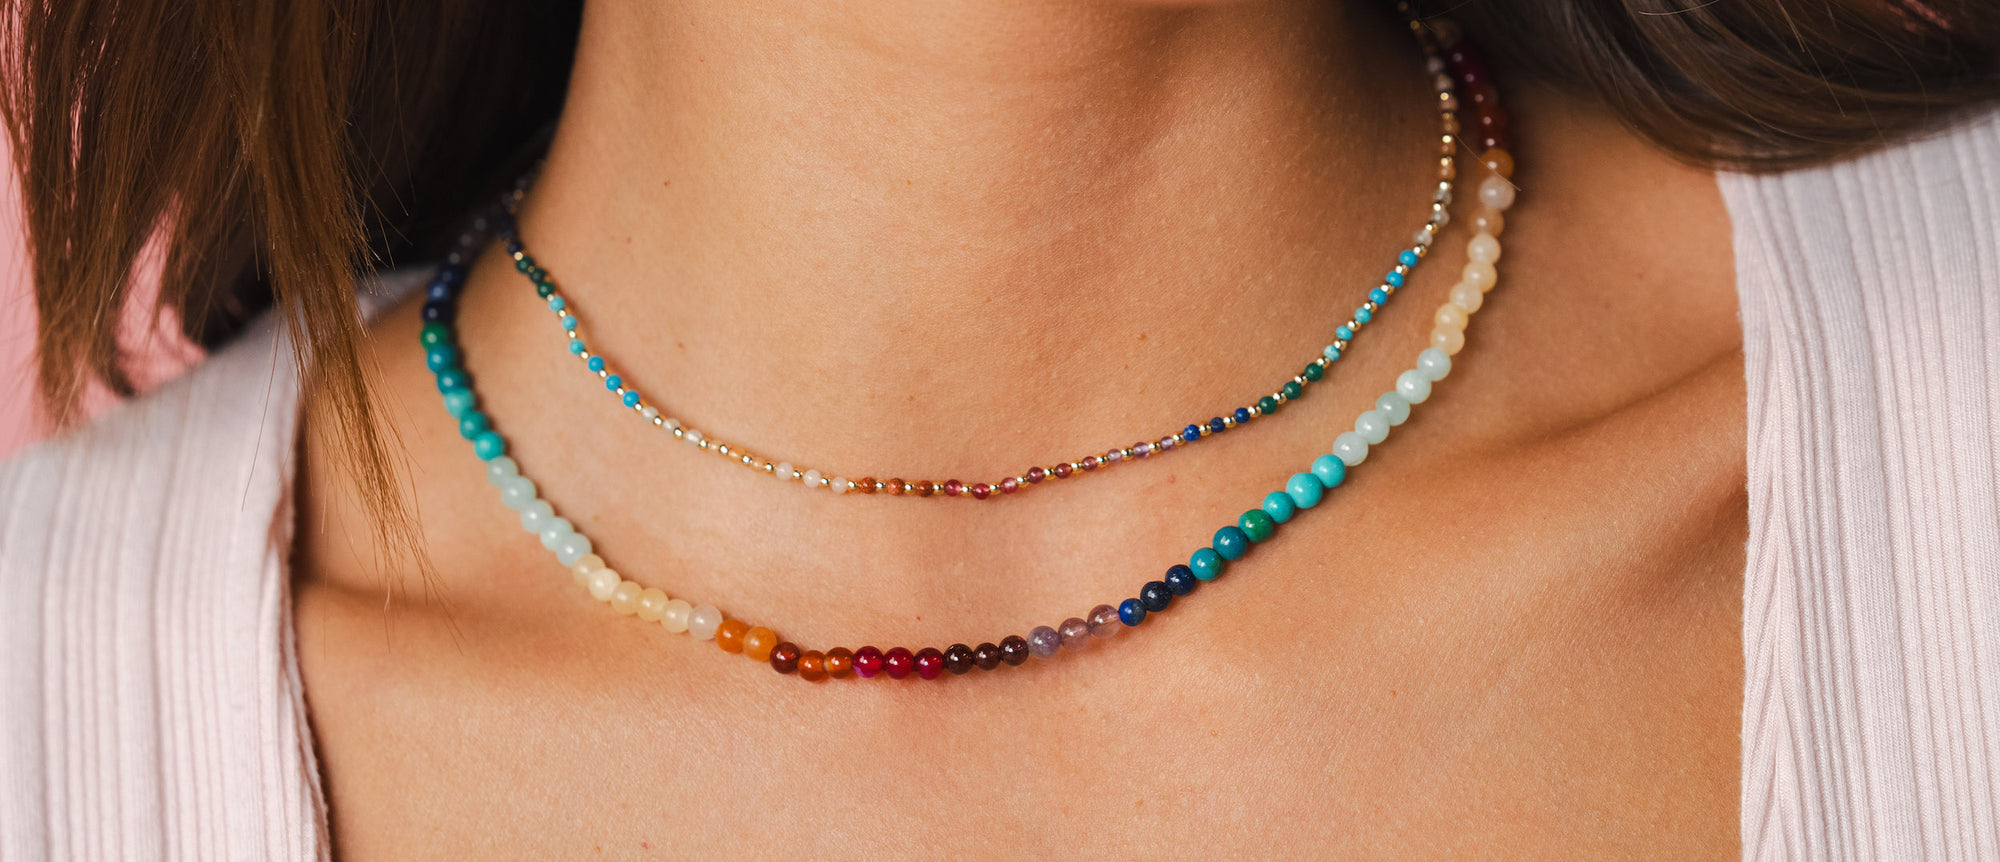 Rainbow Healing Jewelry